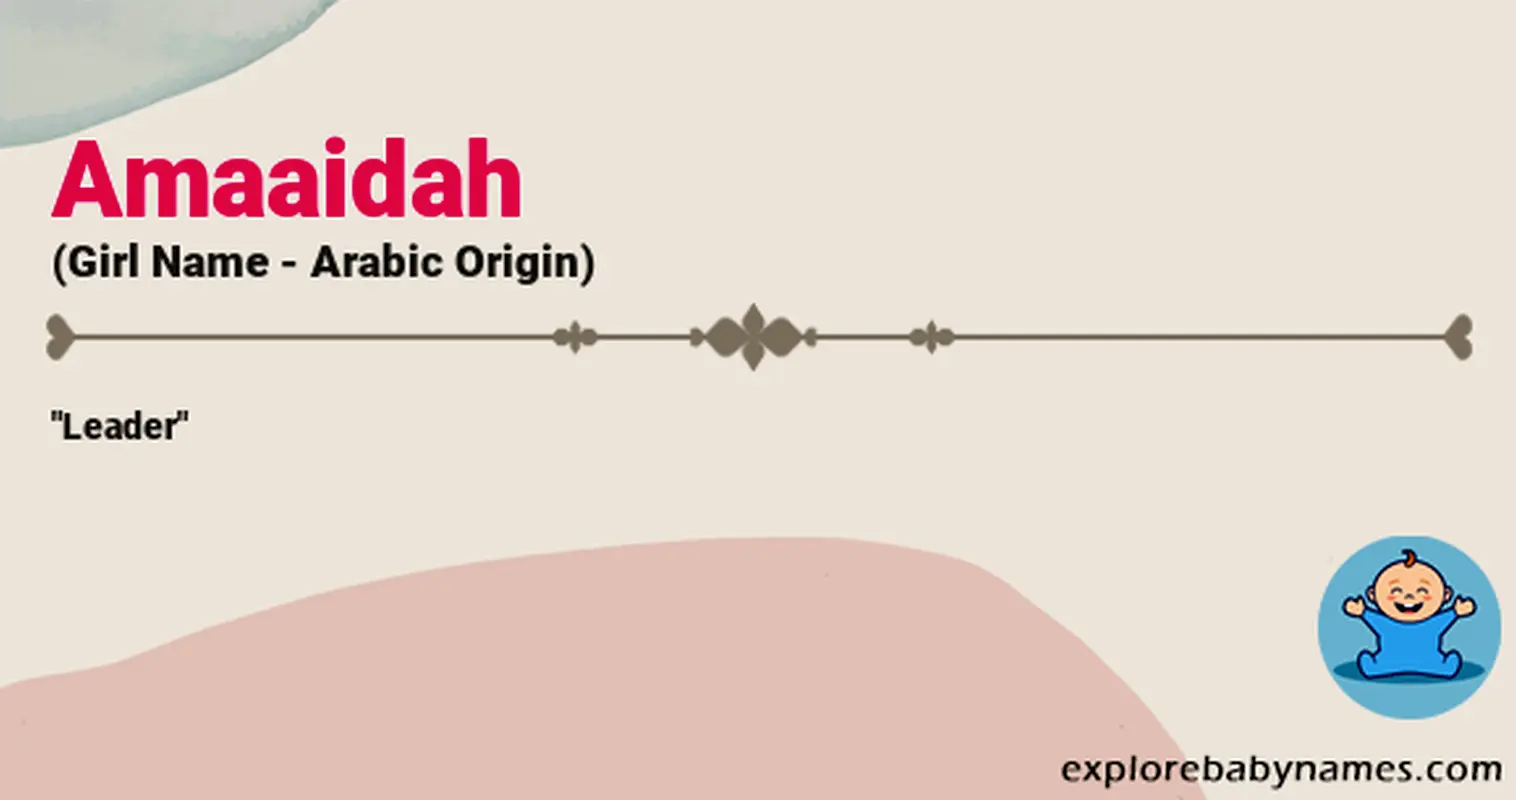 Meaning of Amaaidah